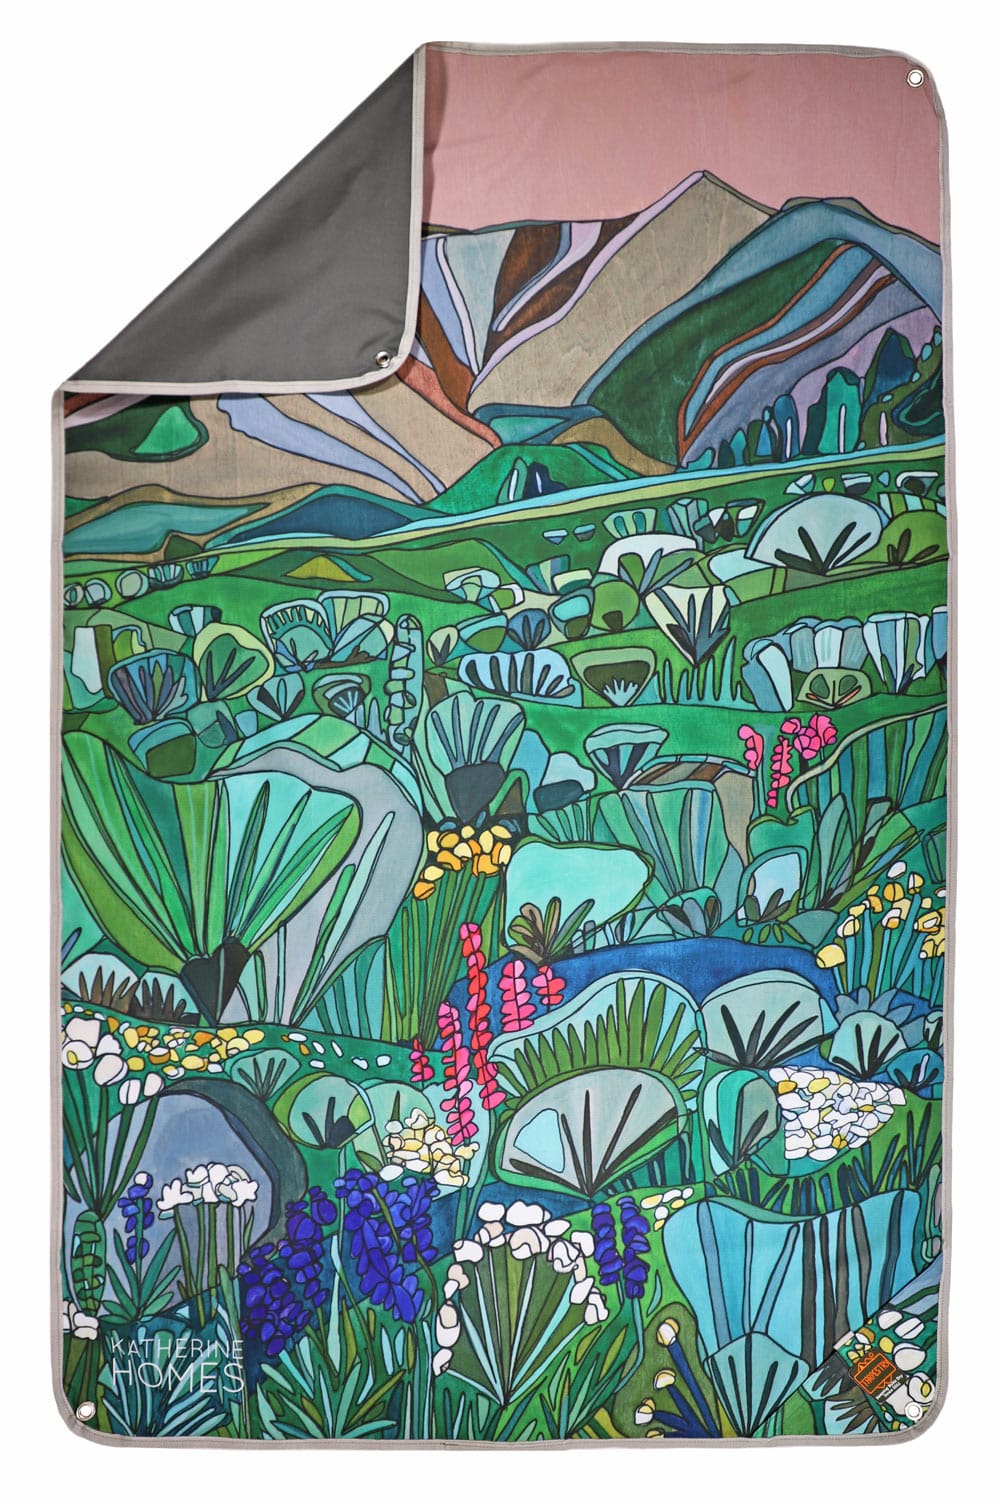 sage and wildflowers Katherine homes printed tarp